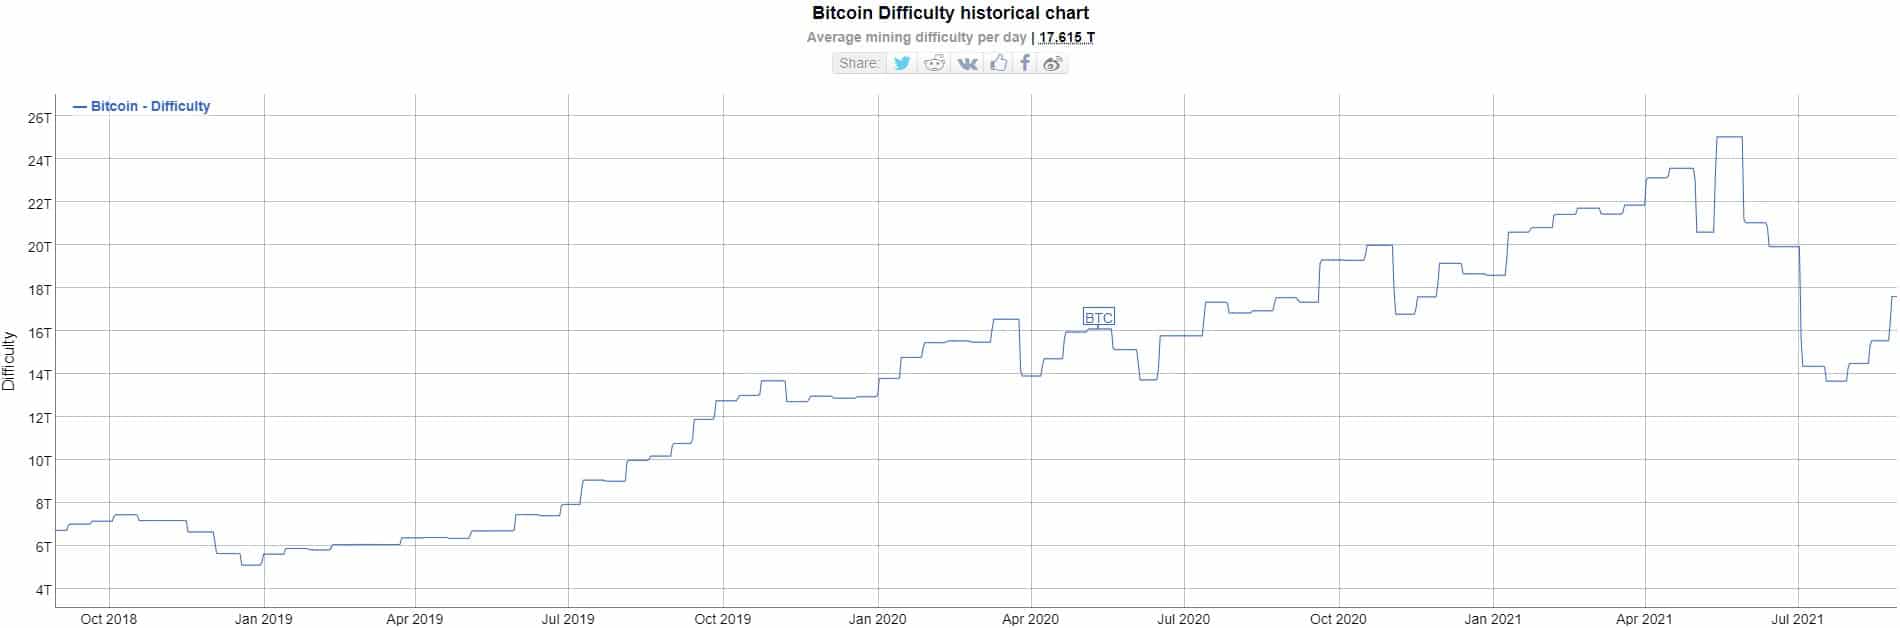 Bitcoin Mining Difficulty. Source: Bitinfocharts